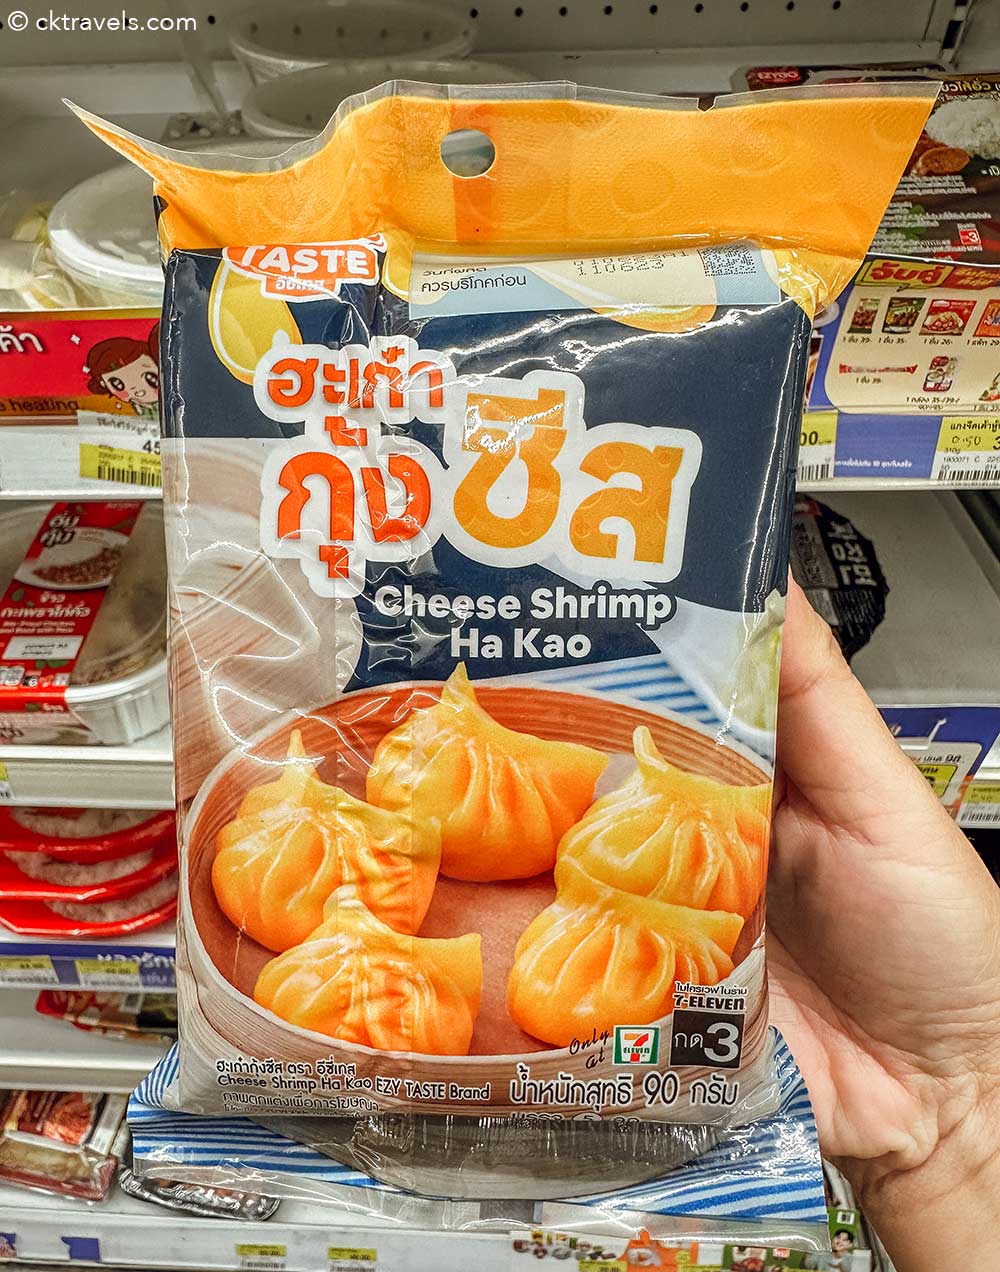 cheese shrimp ha kao dumplings 7 eleven thailand